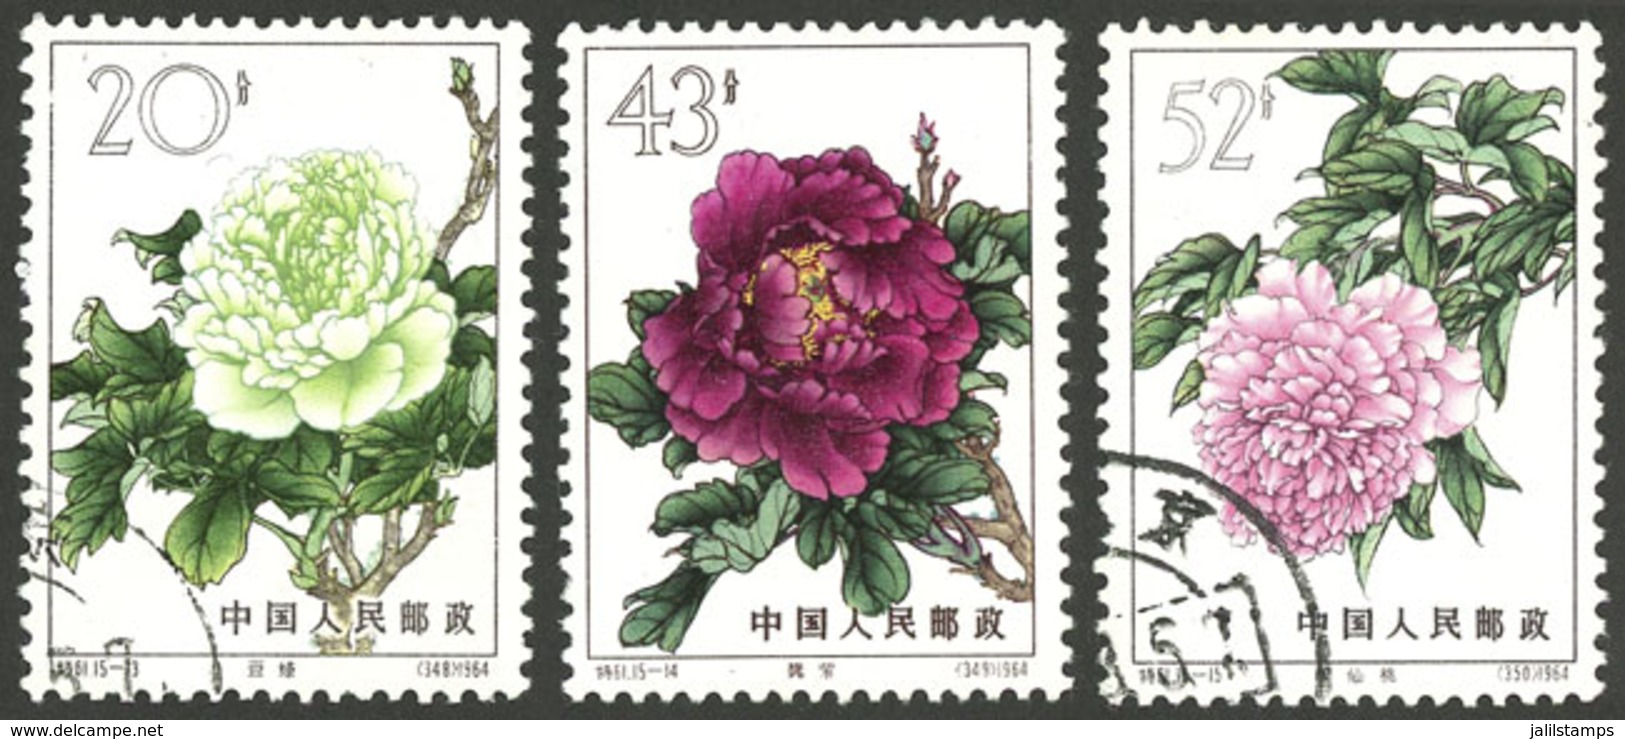 CHINA: Sc.779/781, 1964 Chrysanthemum, The 3 High Values Of The Set, VF Quality! - Gebraucht